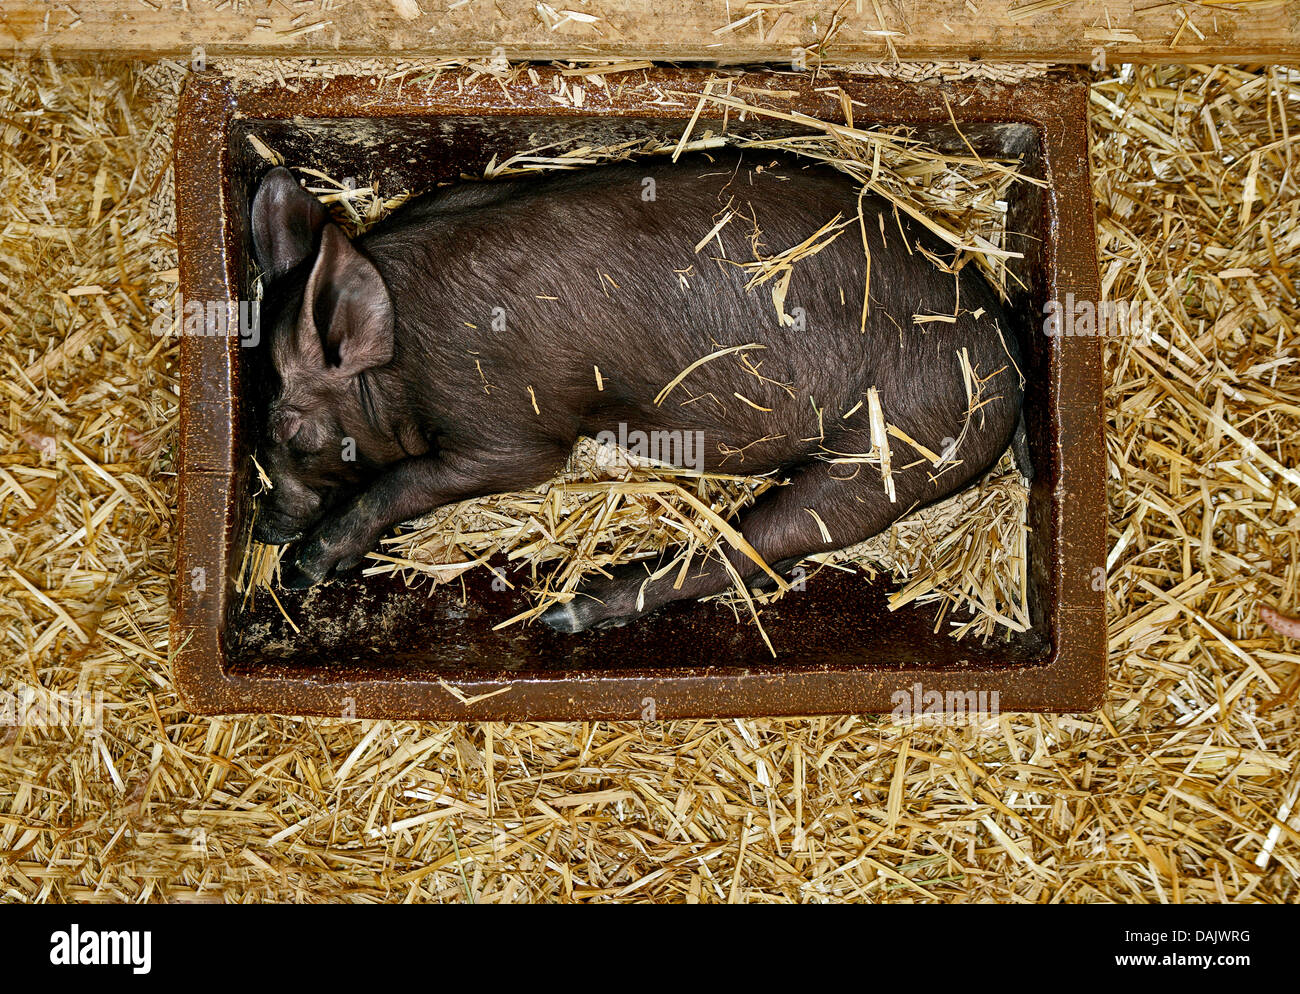 Black piglet sleeping in a feeding trough Stock Photo